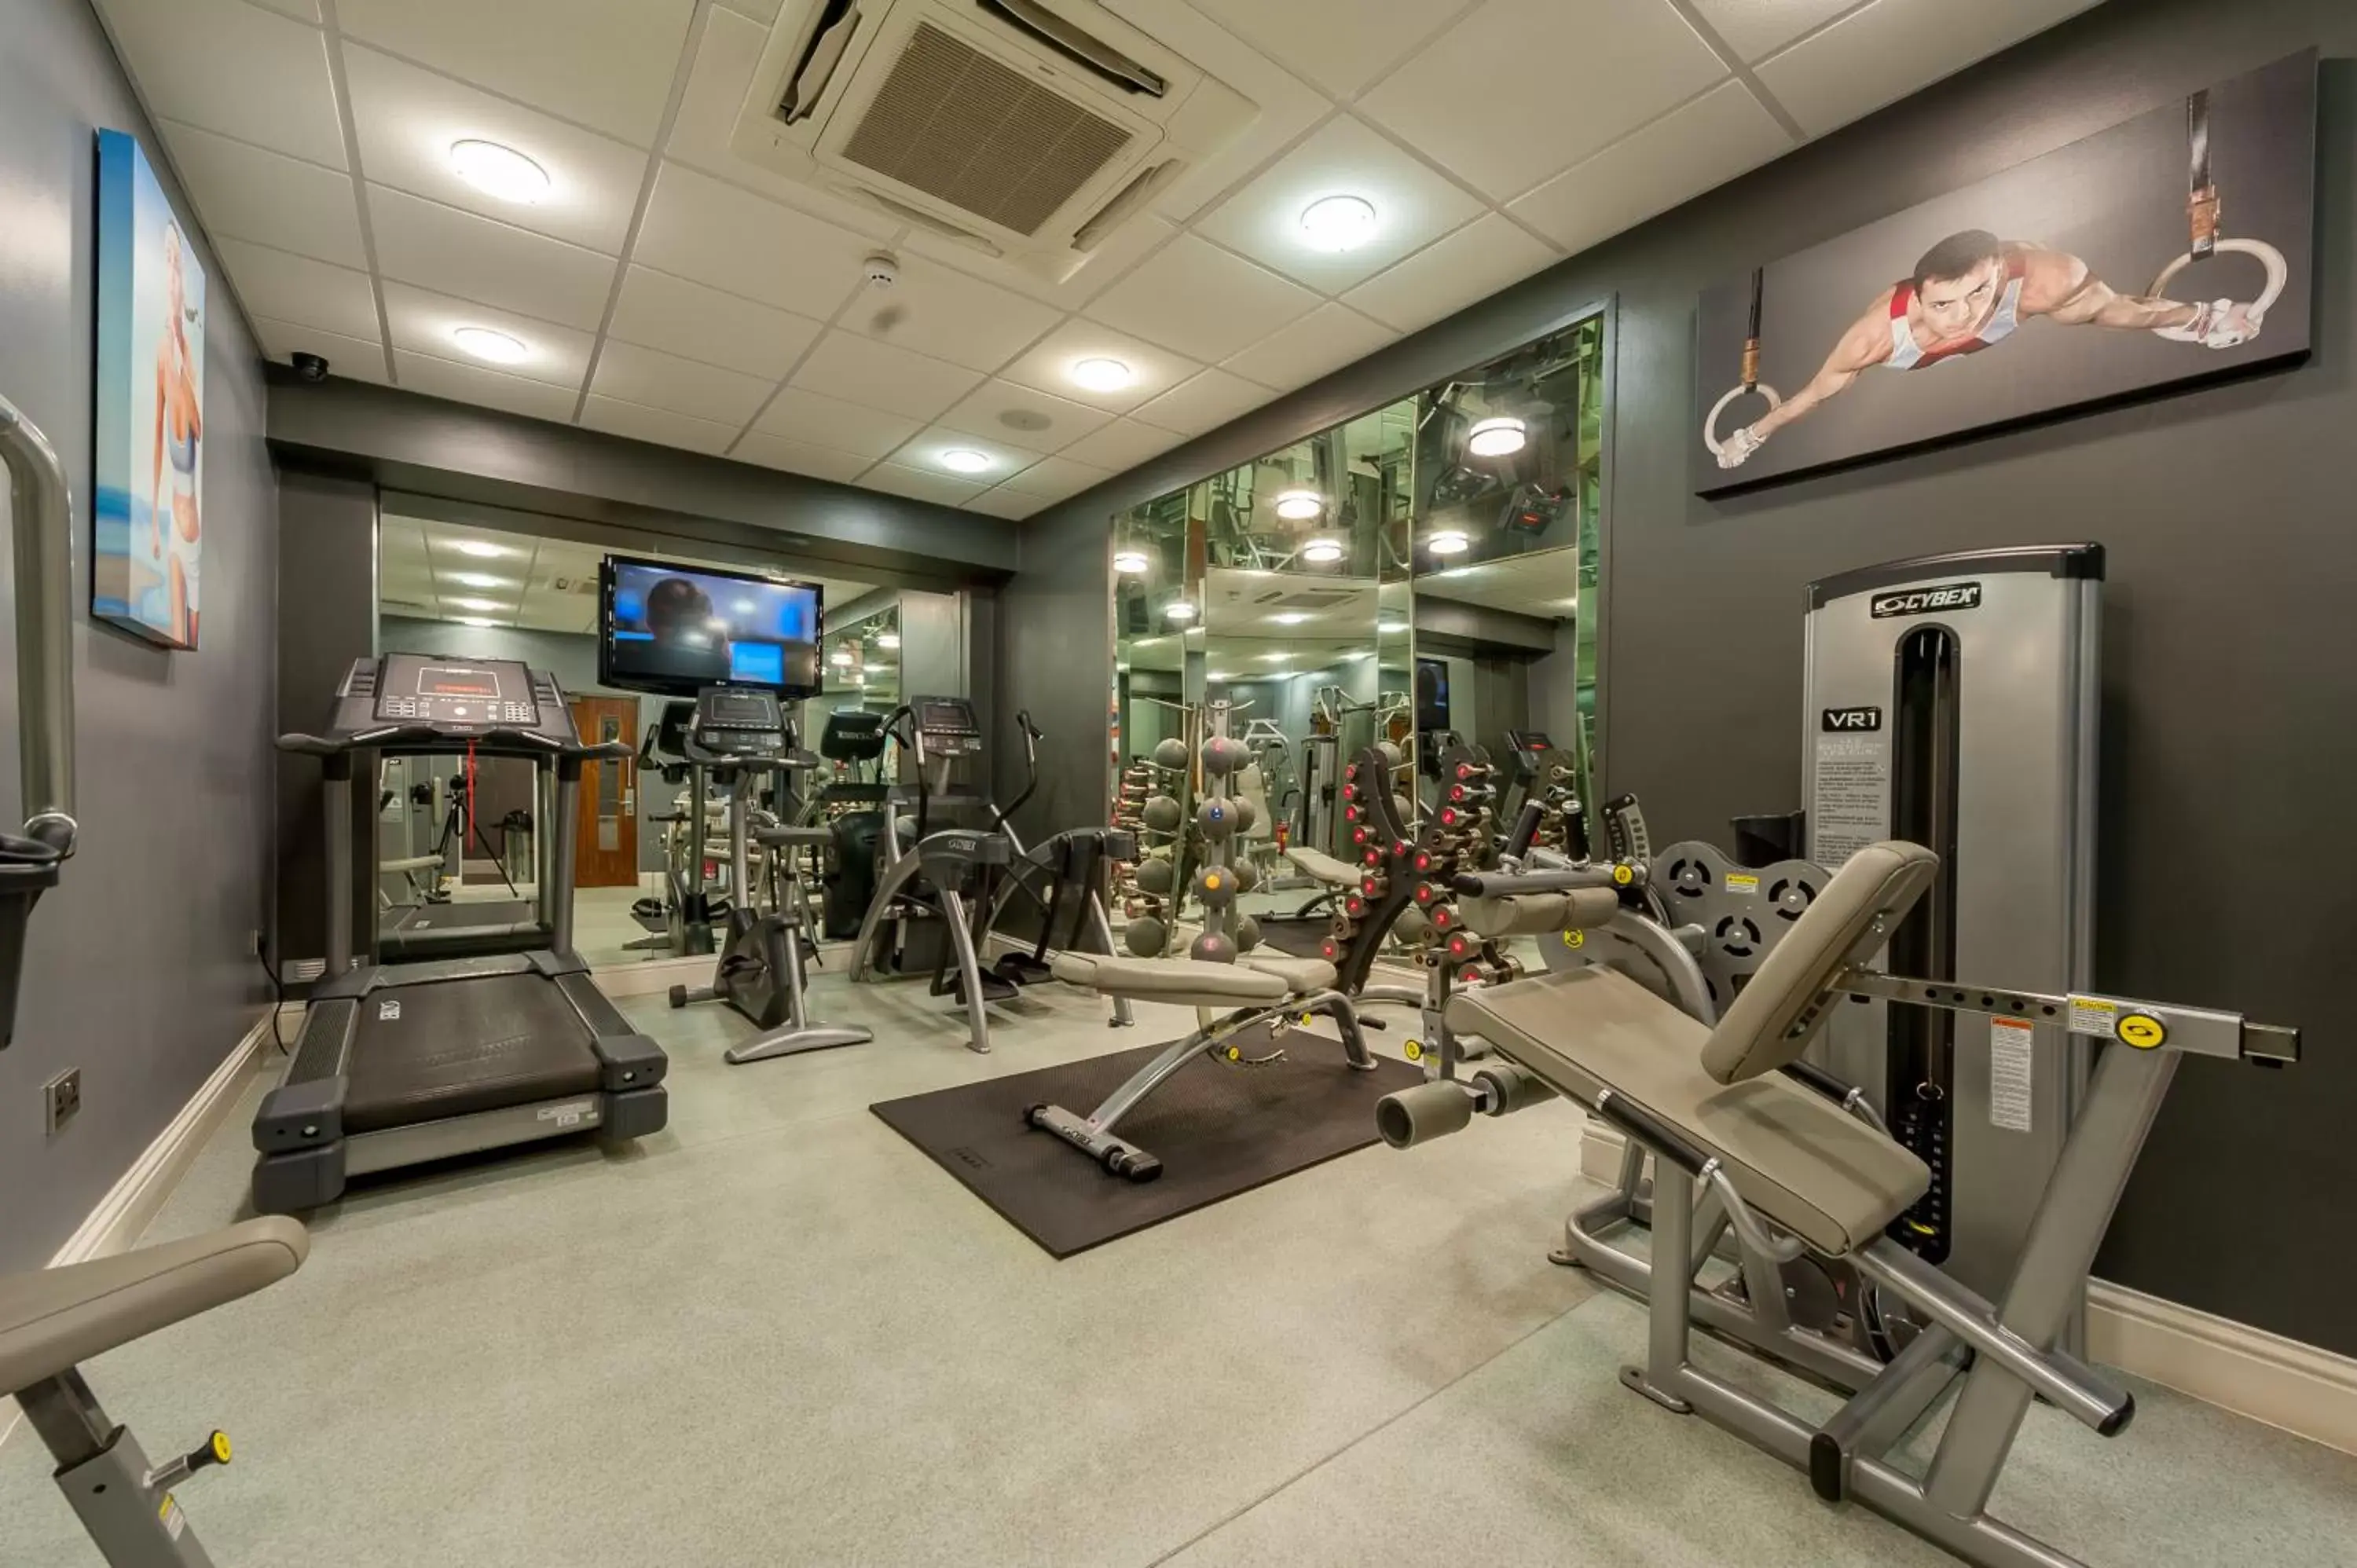 Fitness centre/facilities, Fitness Center/Facilities in Mercure Nottingham City Centre Hotel